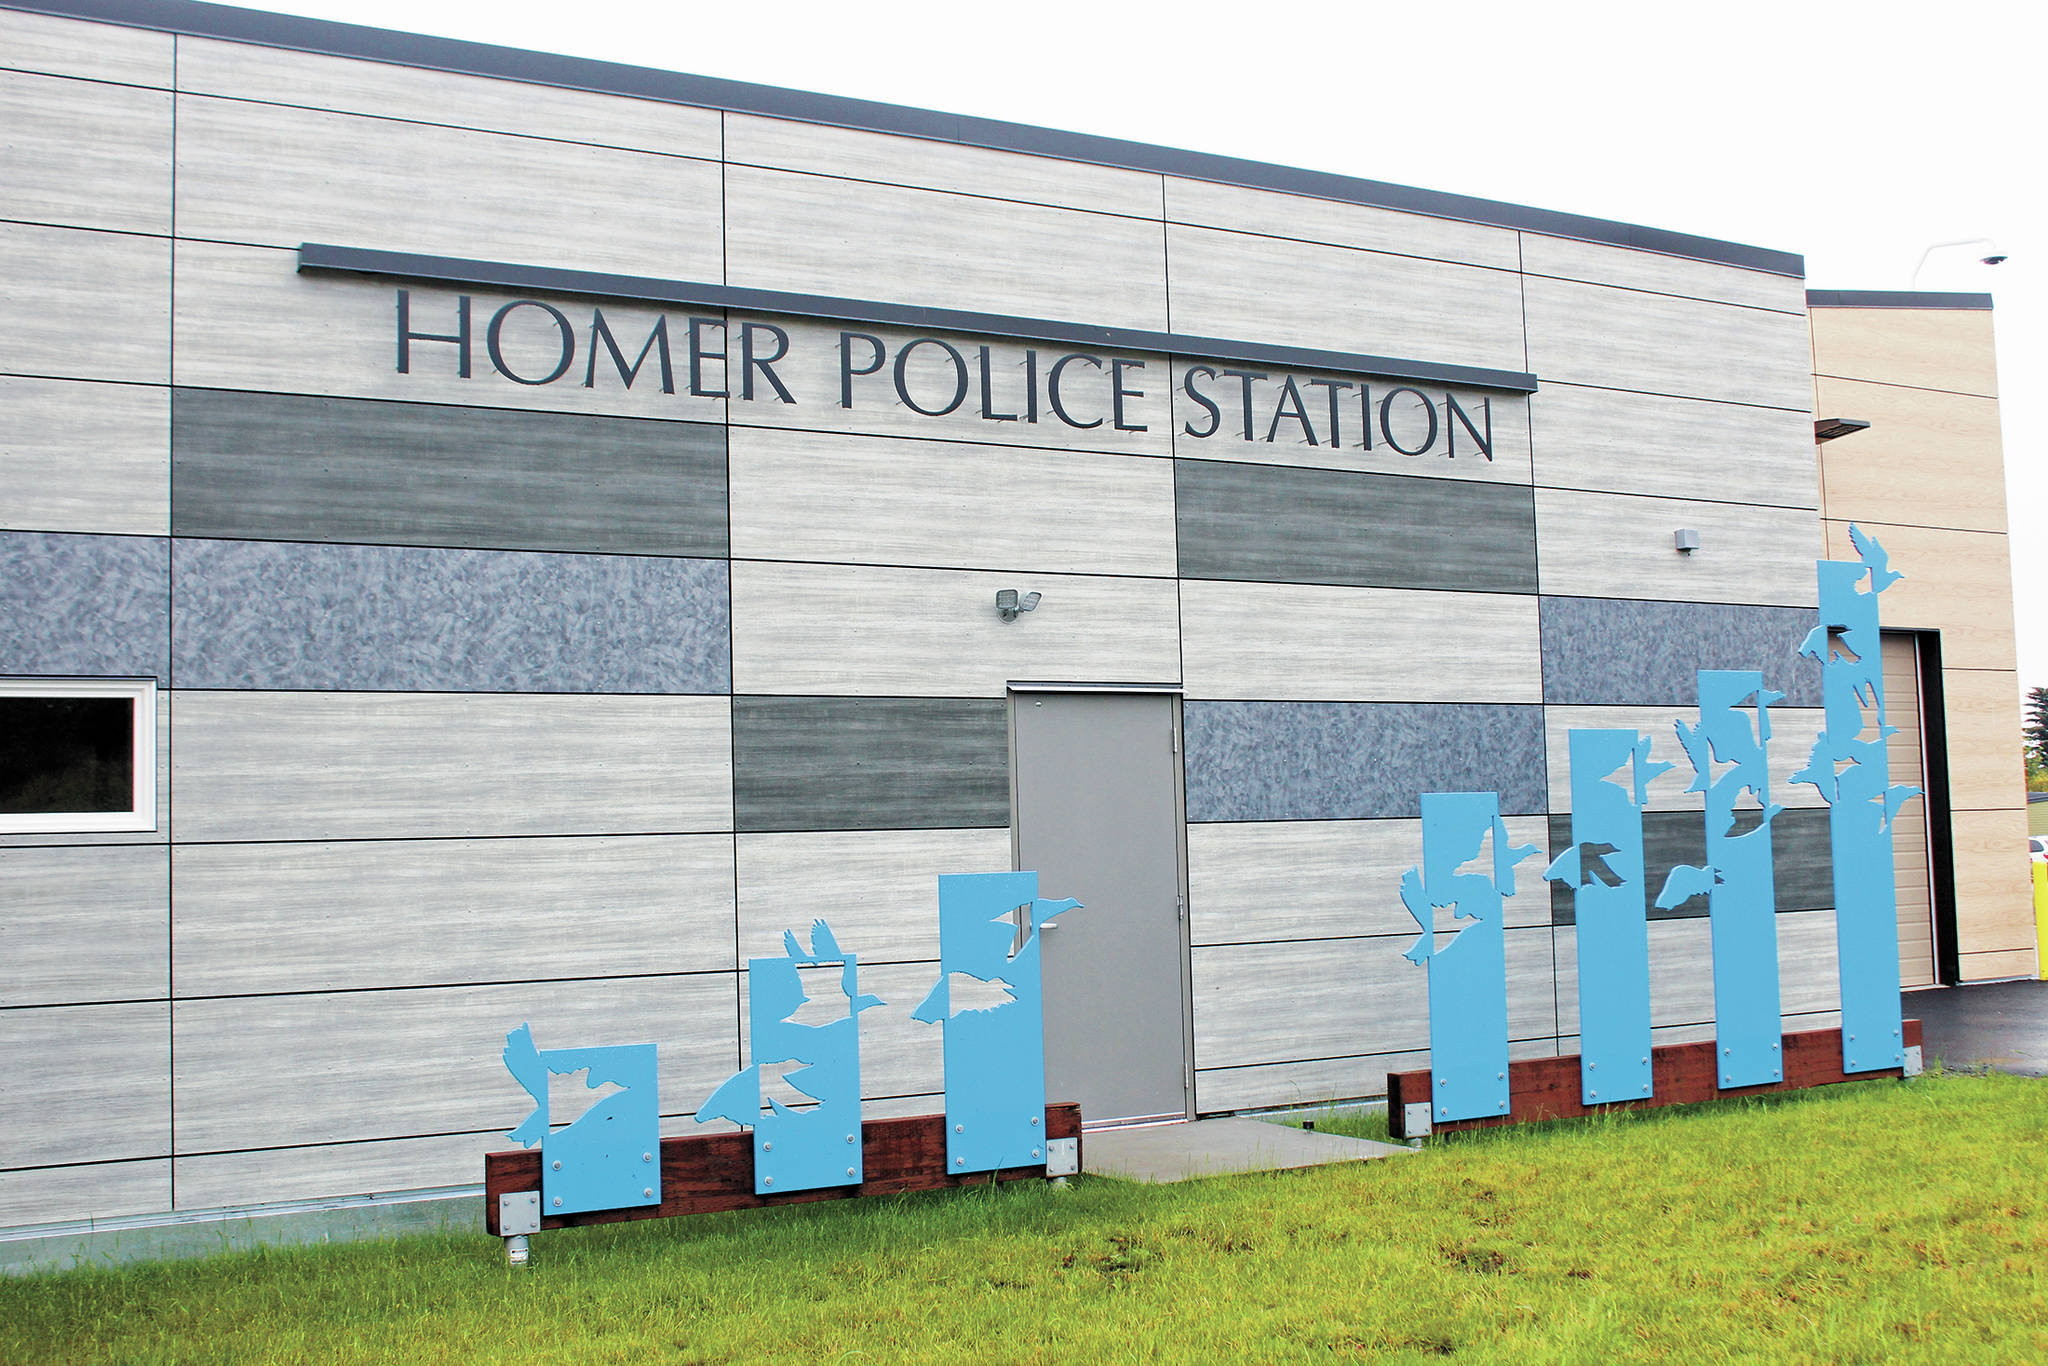 The Homer Police Station as seen Sept. 24, 2020 in Homer, Alaska. (Photo by Megan Pacer/Homer News)